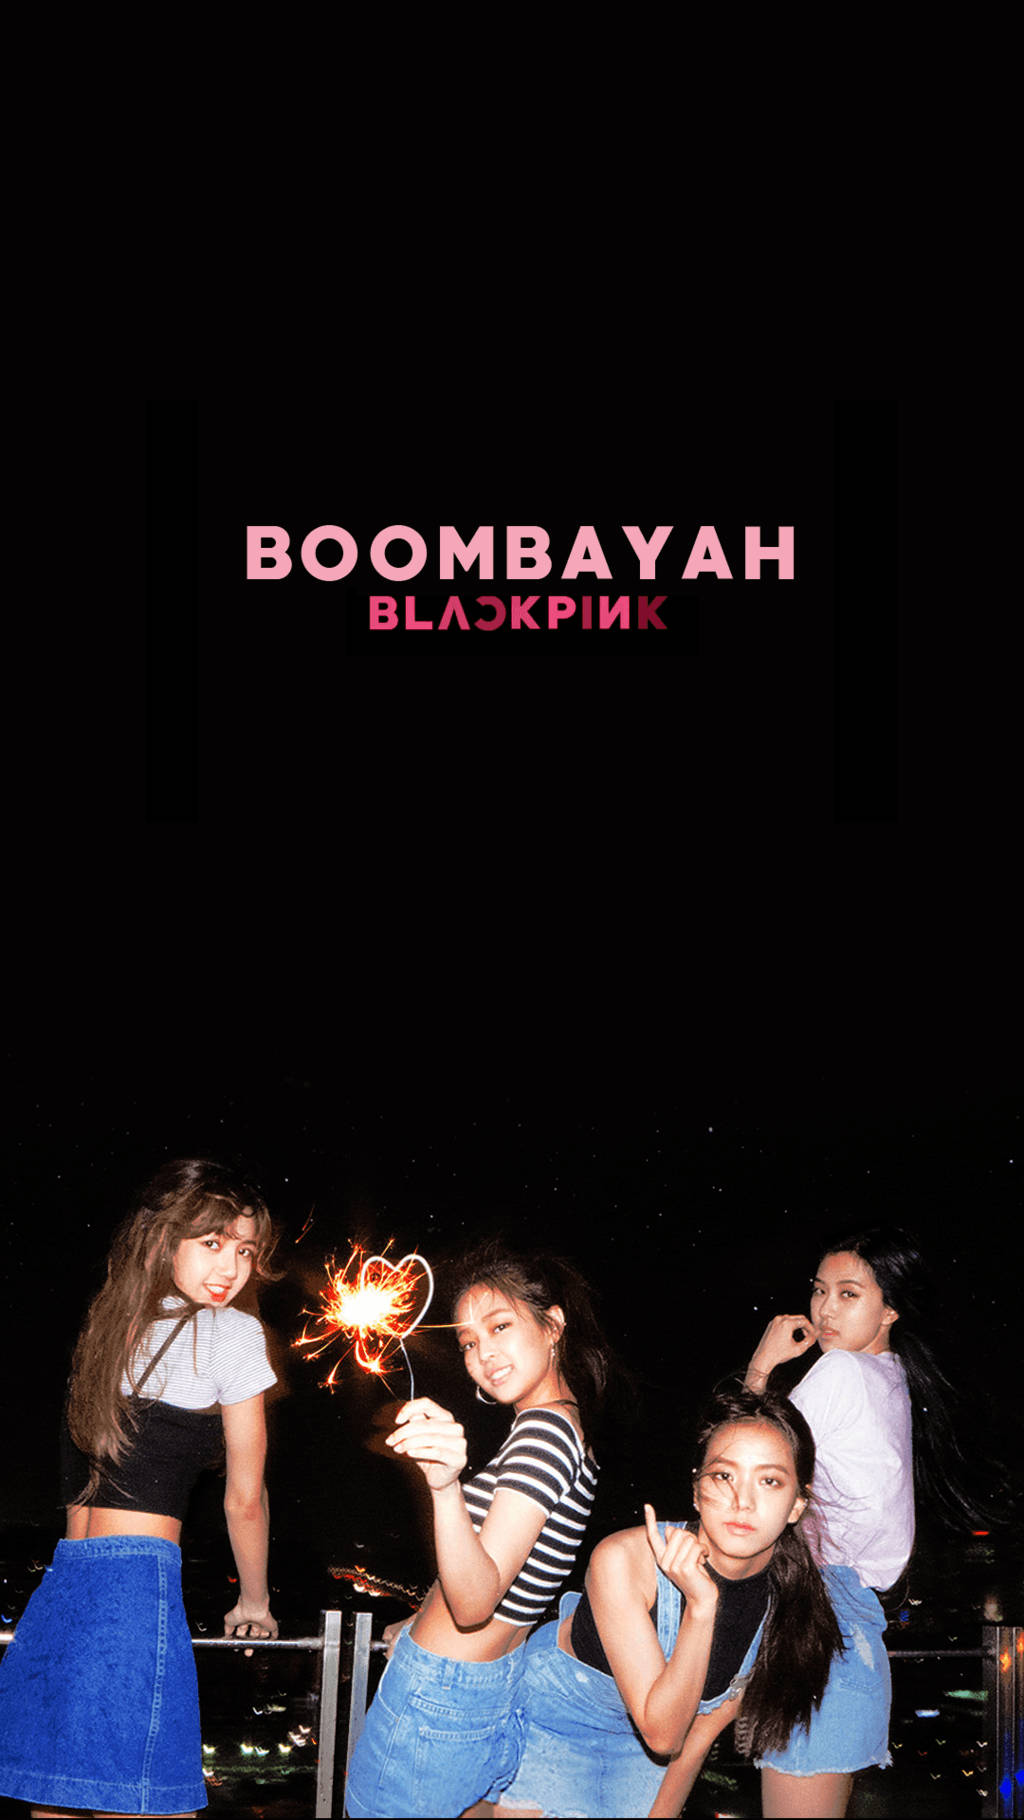 Boombayah Blackpink Members Night Out Wallpaper